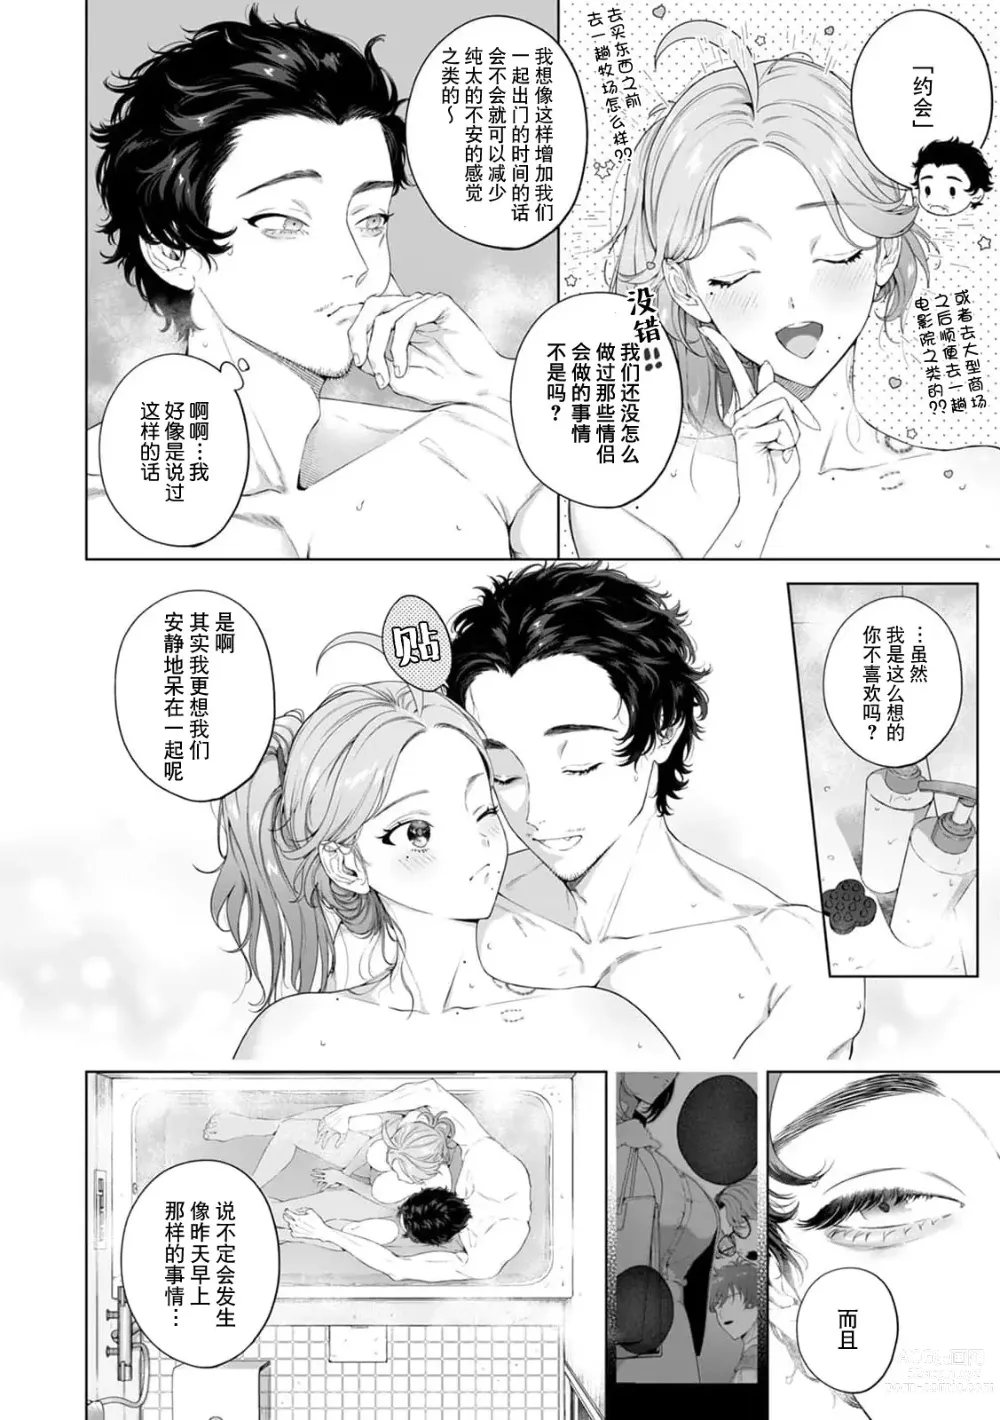 Page 156 of manga 驯幼染认真起来是非常糟糕的溺爱  Ch. 1-6